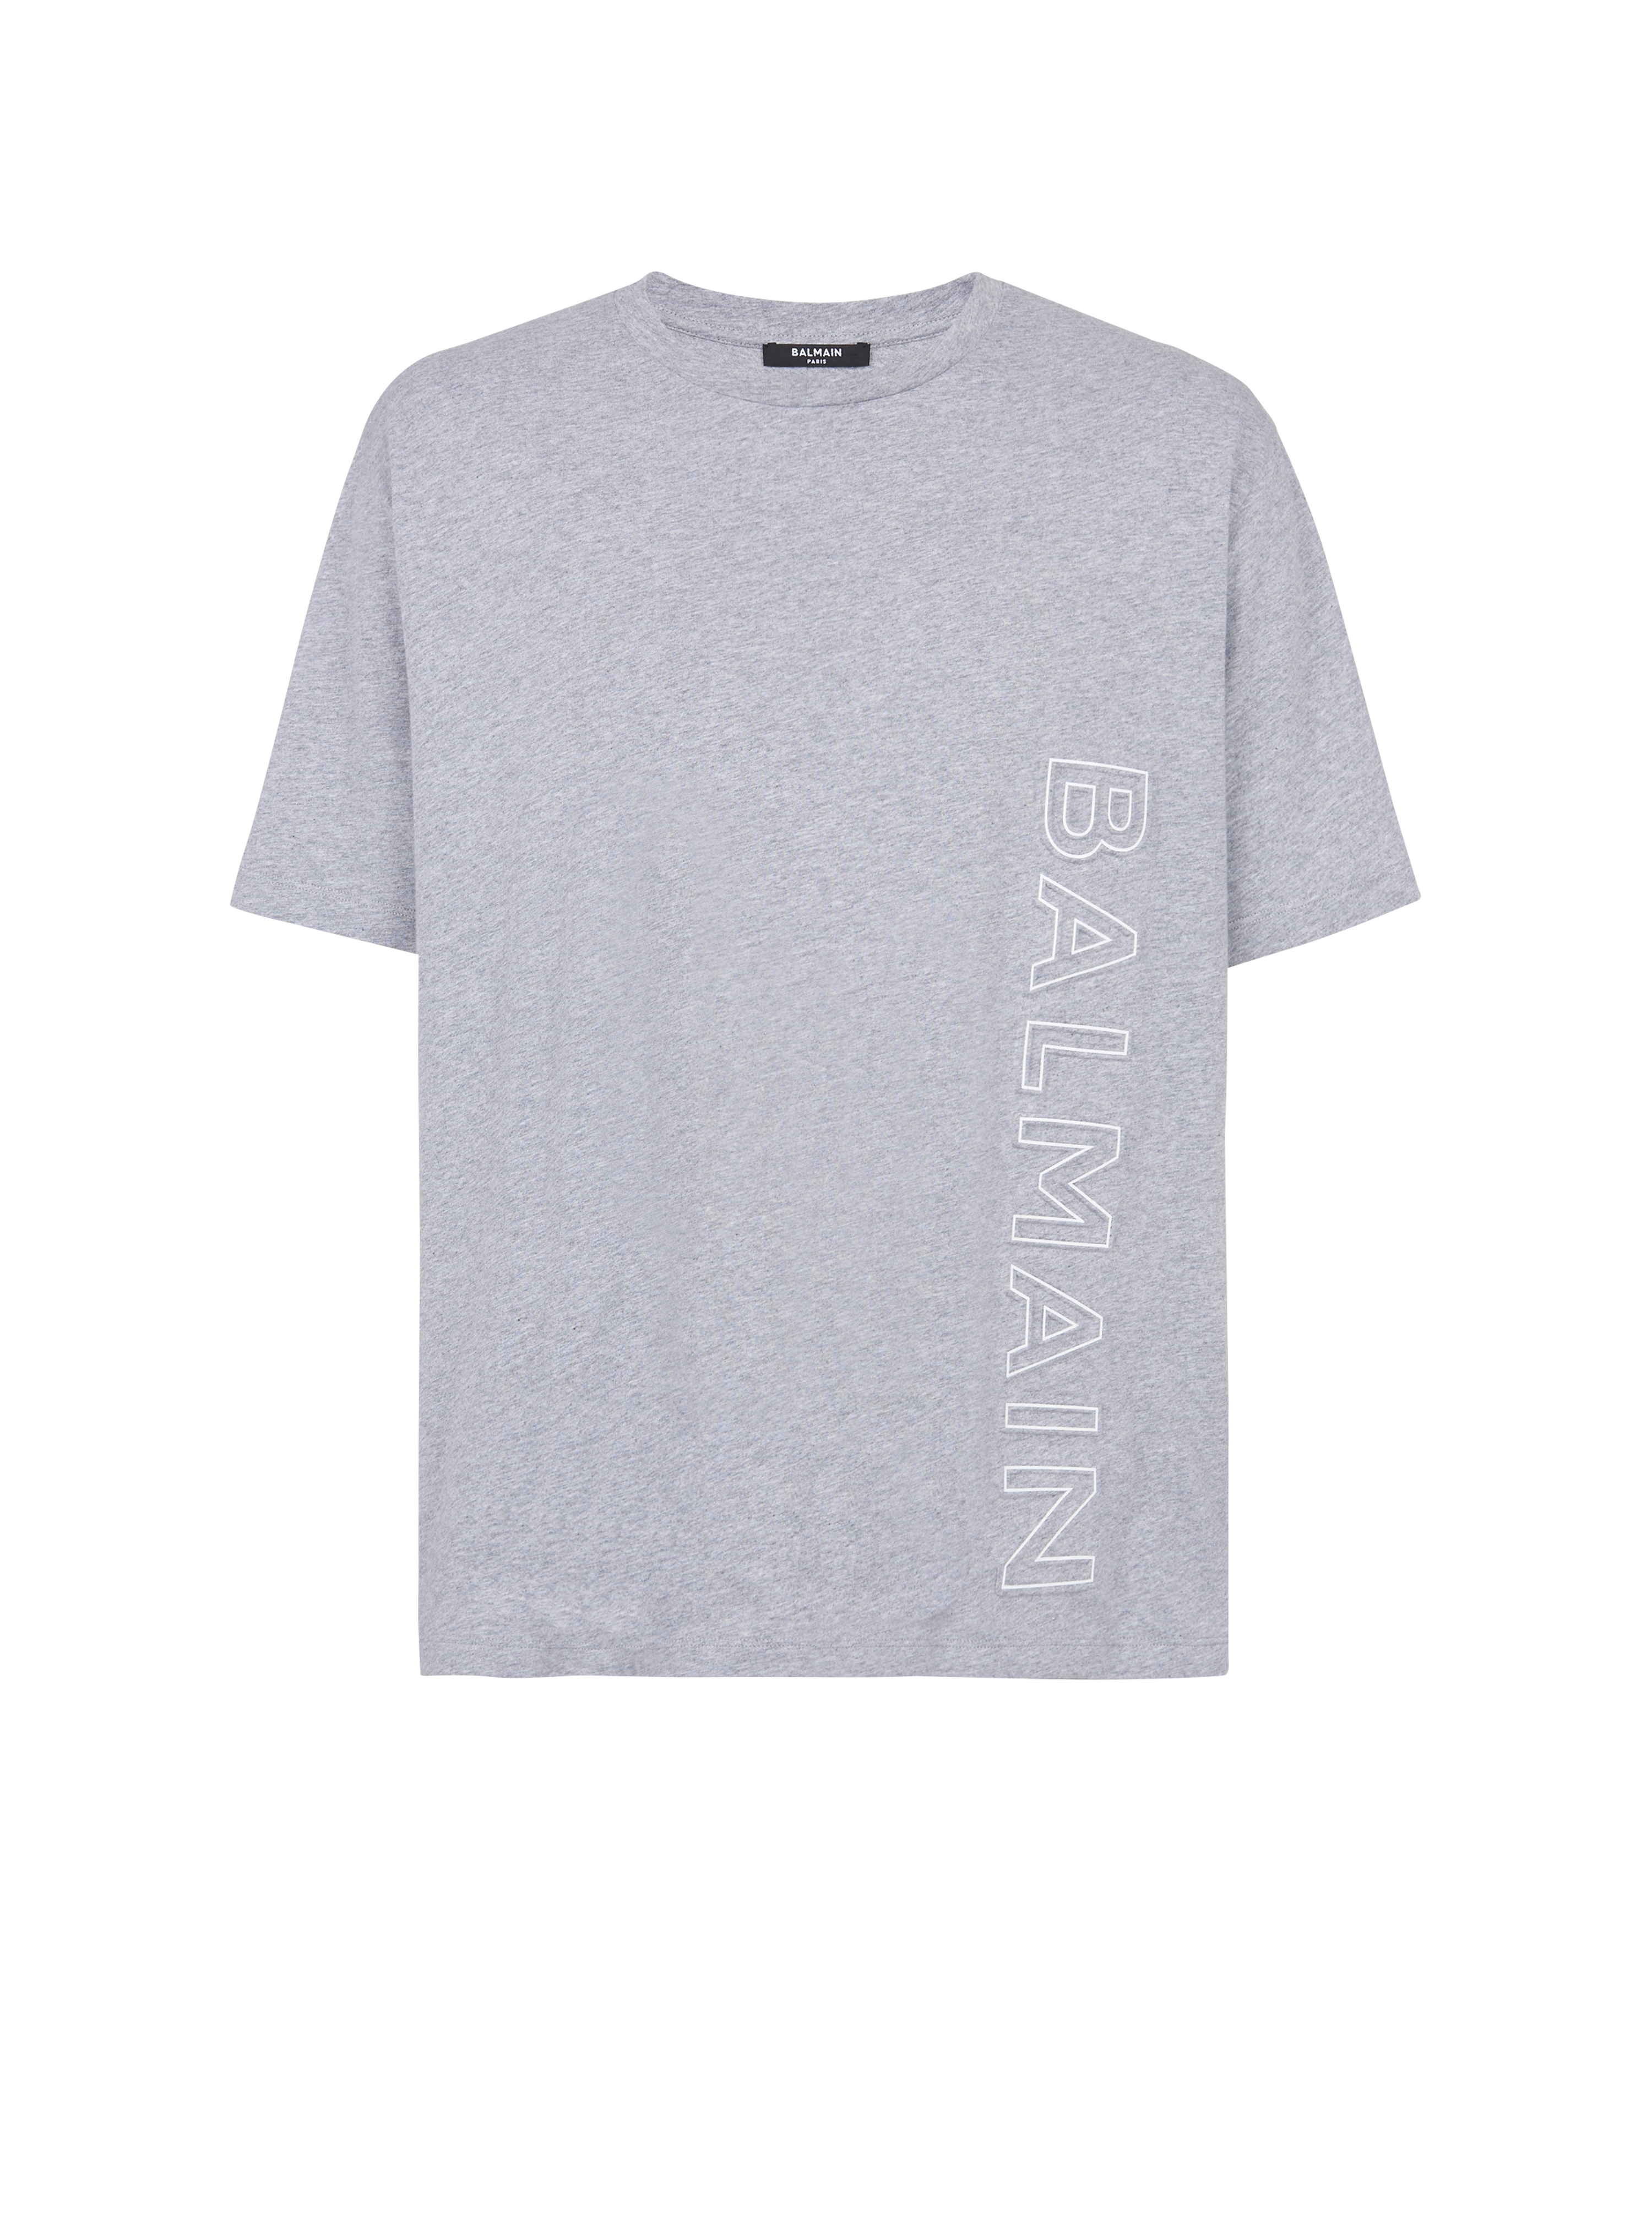 T-shirt in eco-responsible cotton with reflective Balmain logo, grey